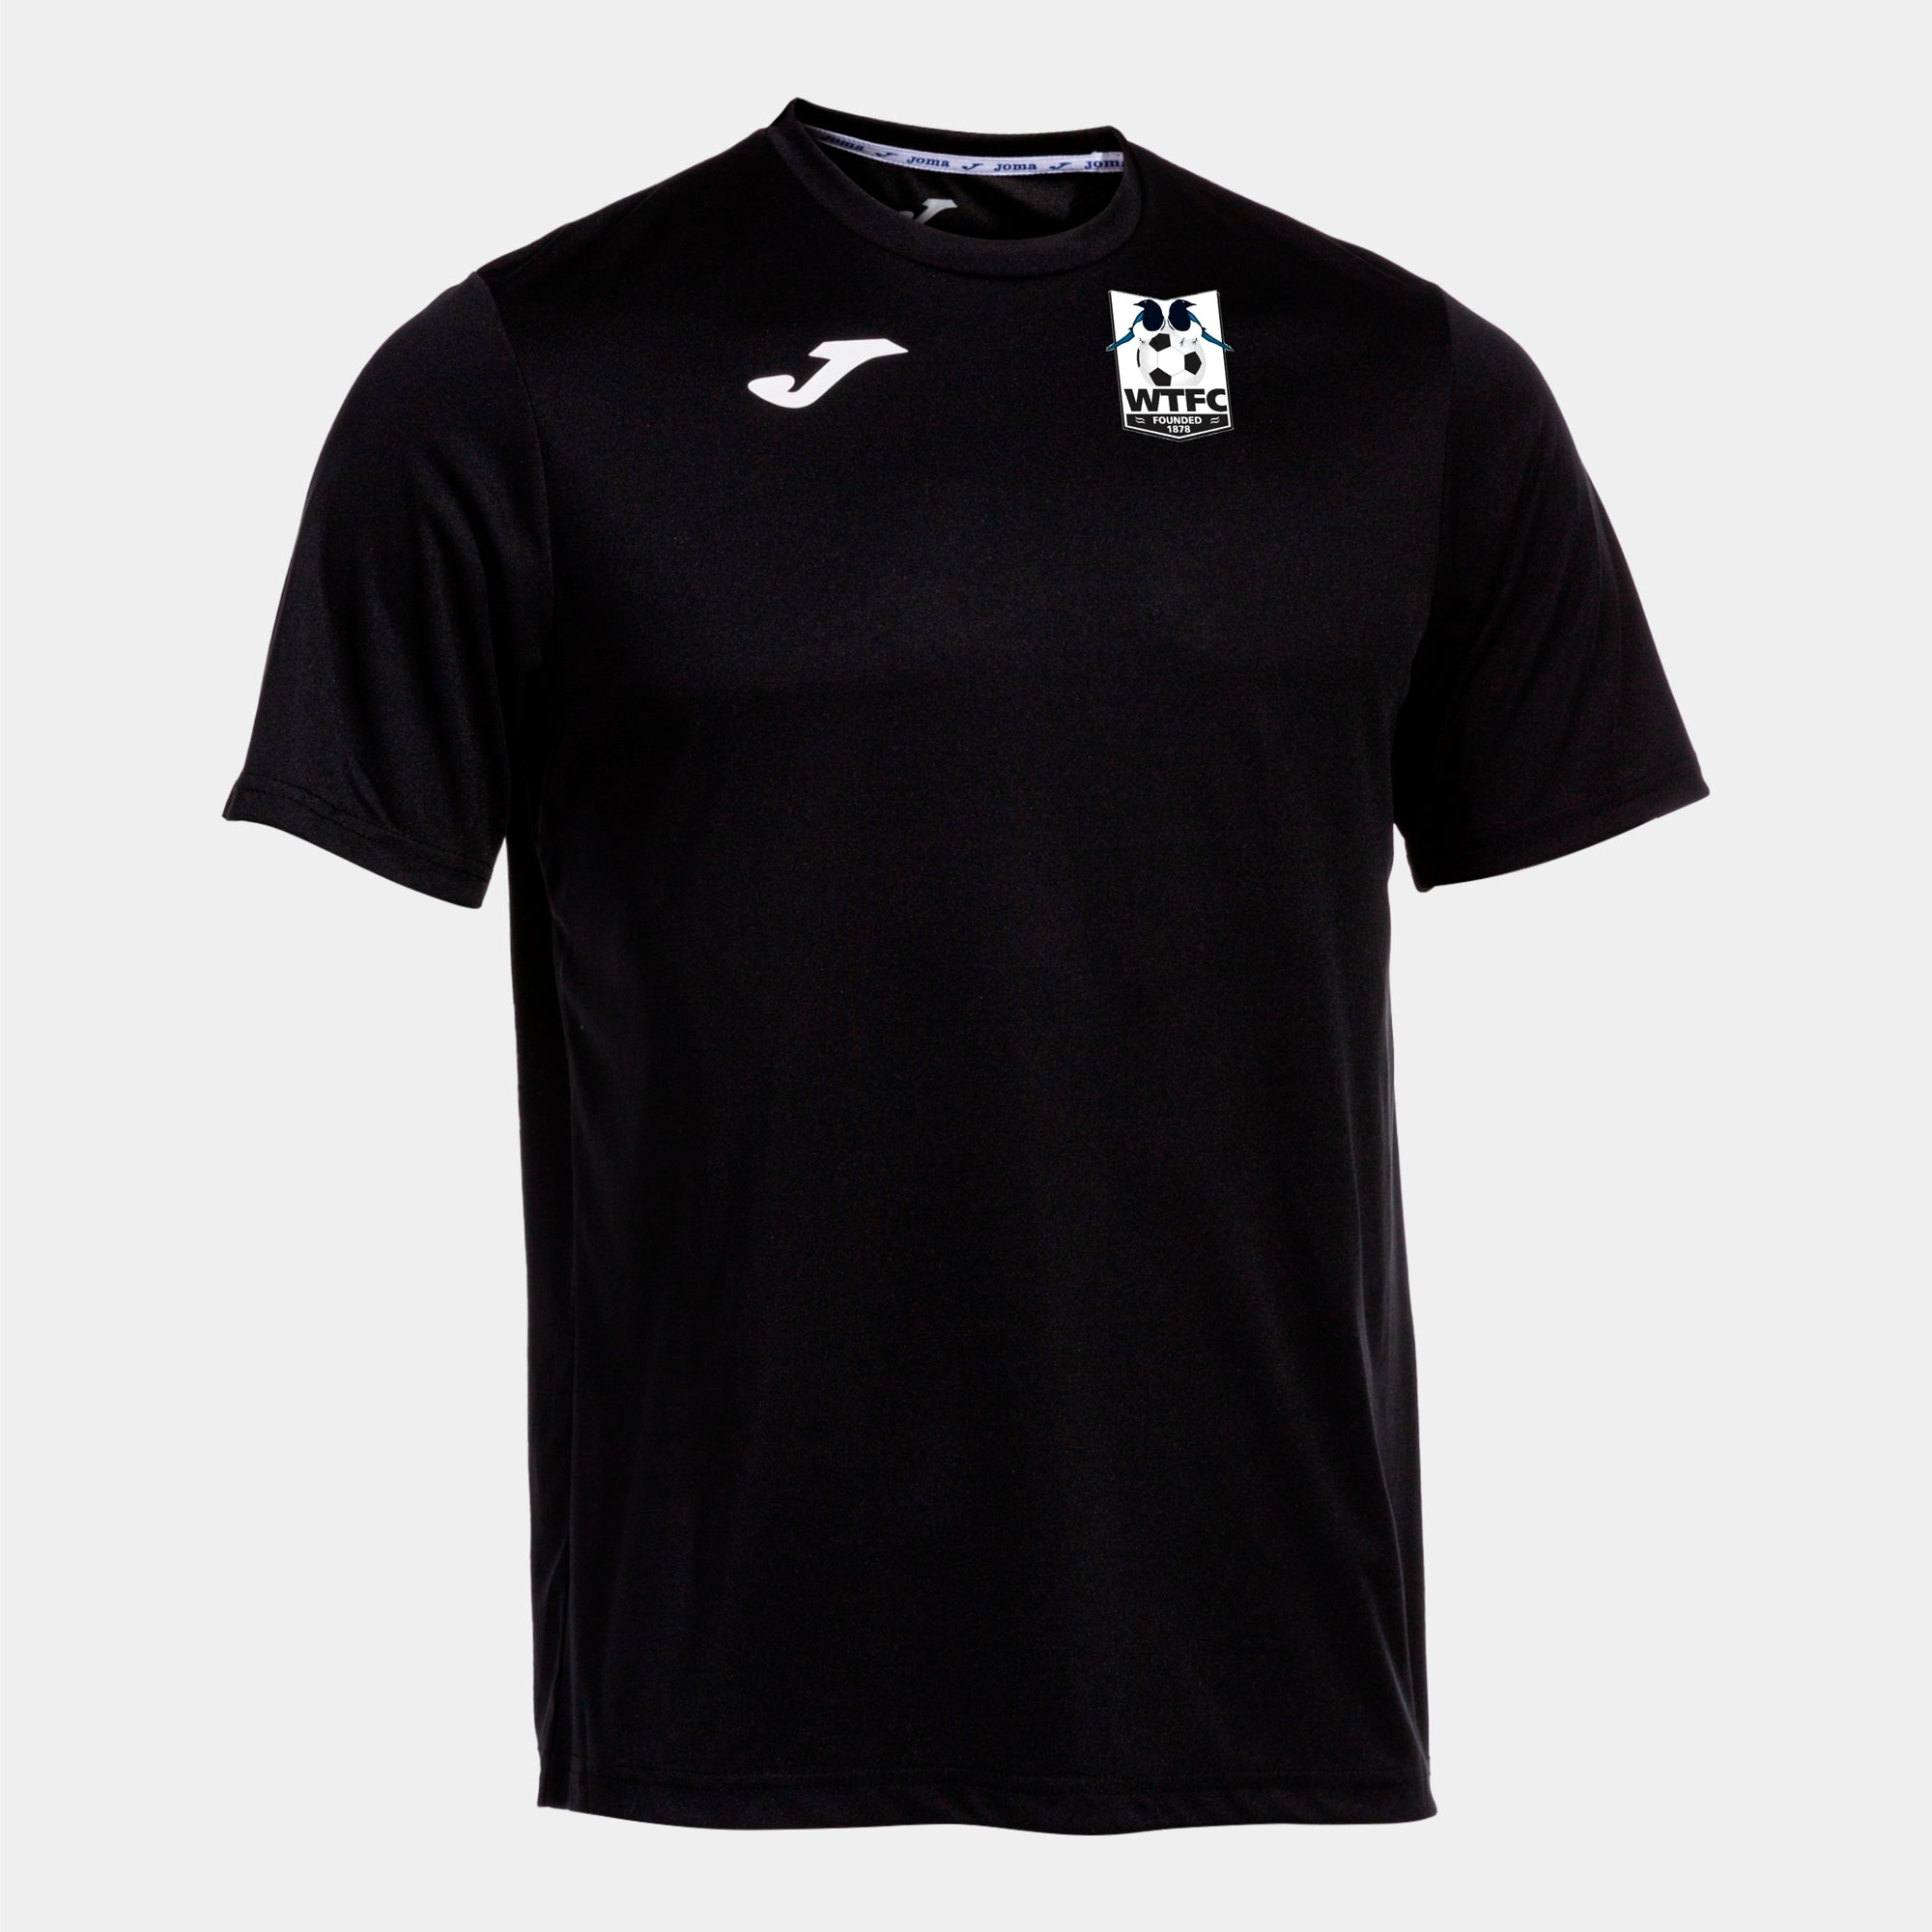 Wimborne - Joma Combi Short Sleeved T-Shirt - Black